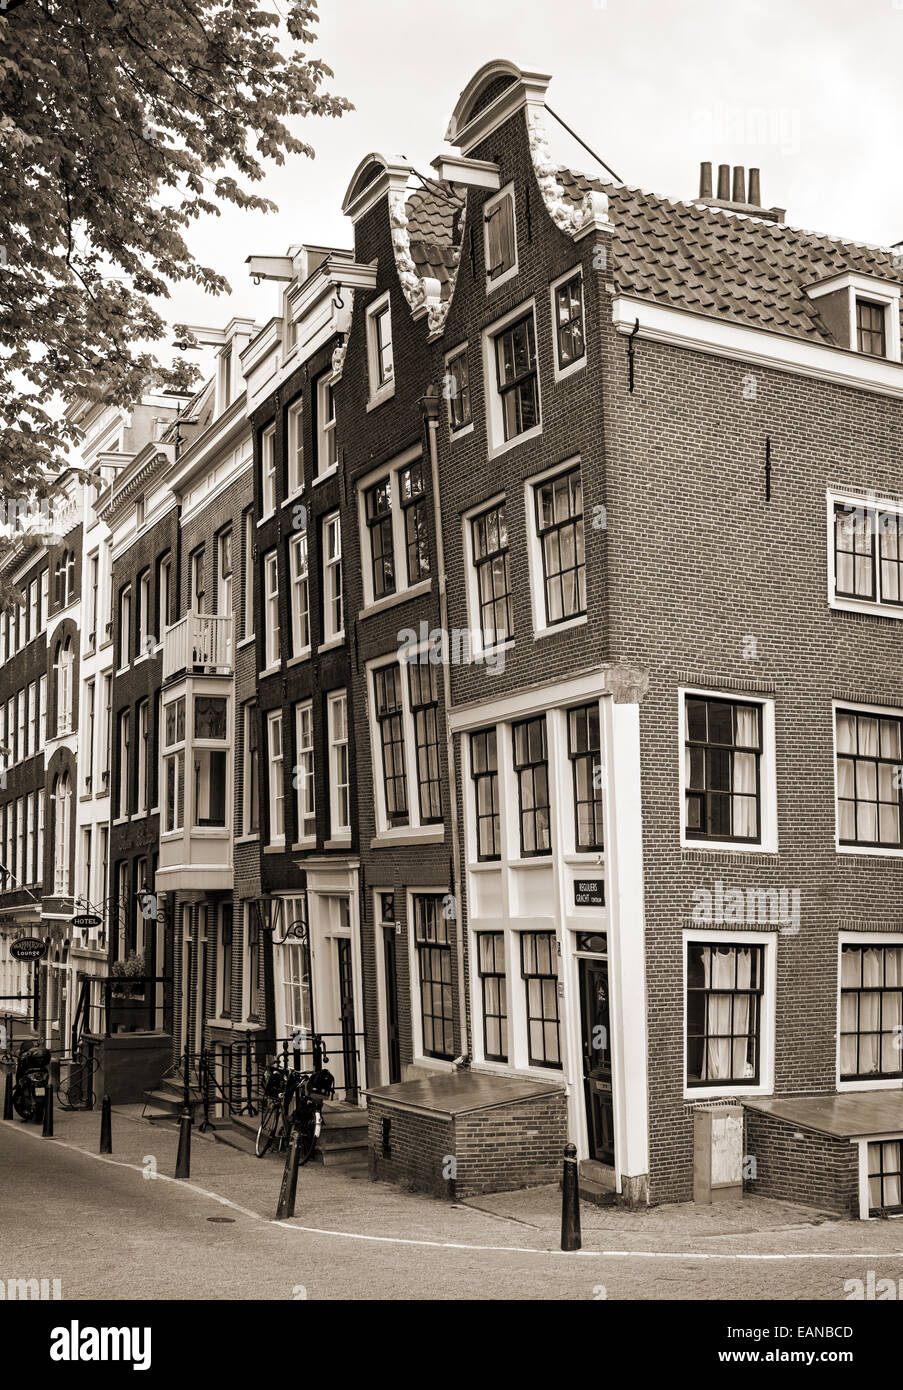 Amsterdam houses Stock Photo